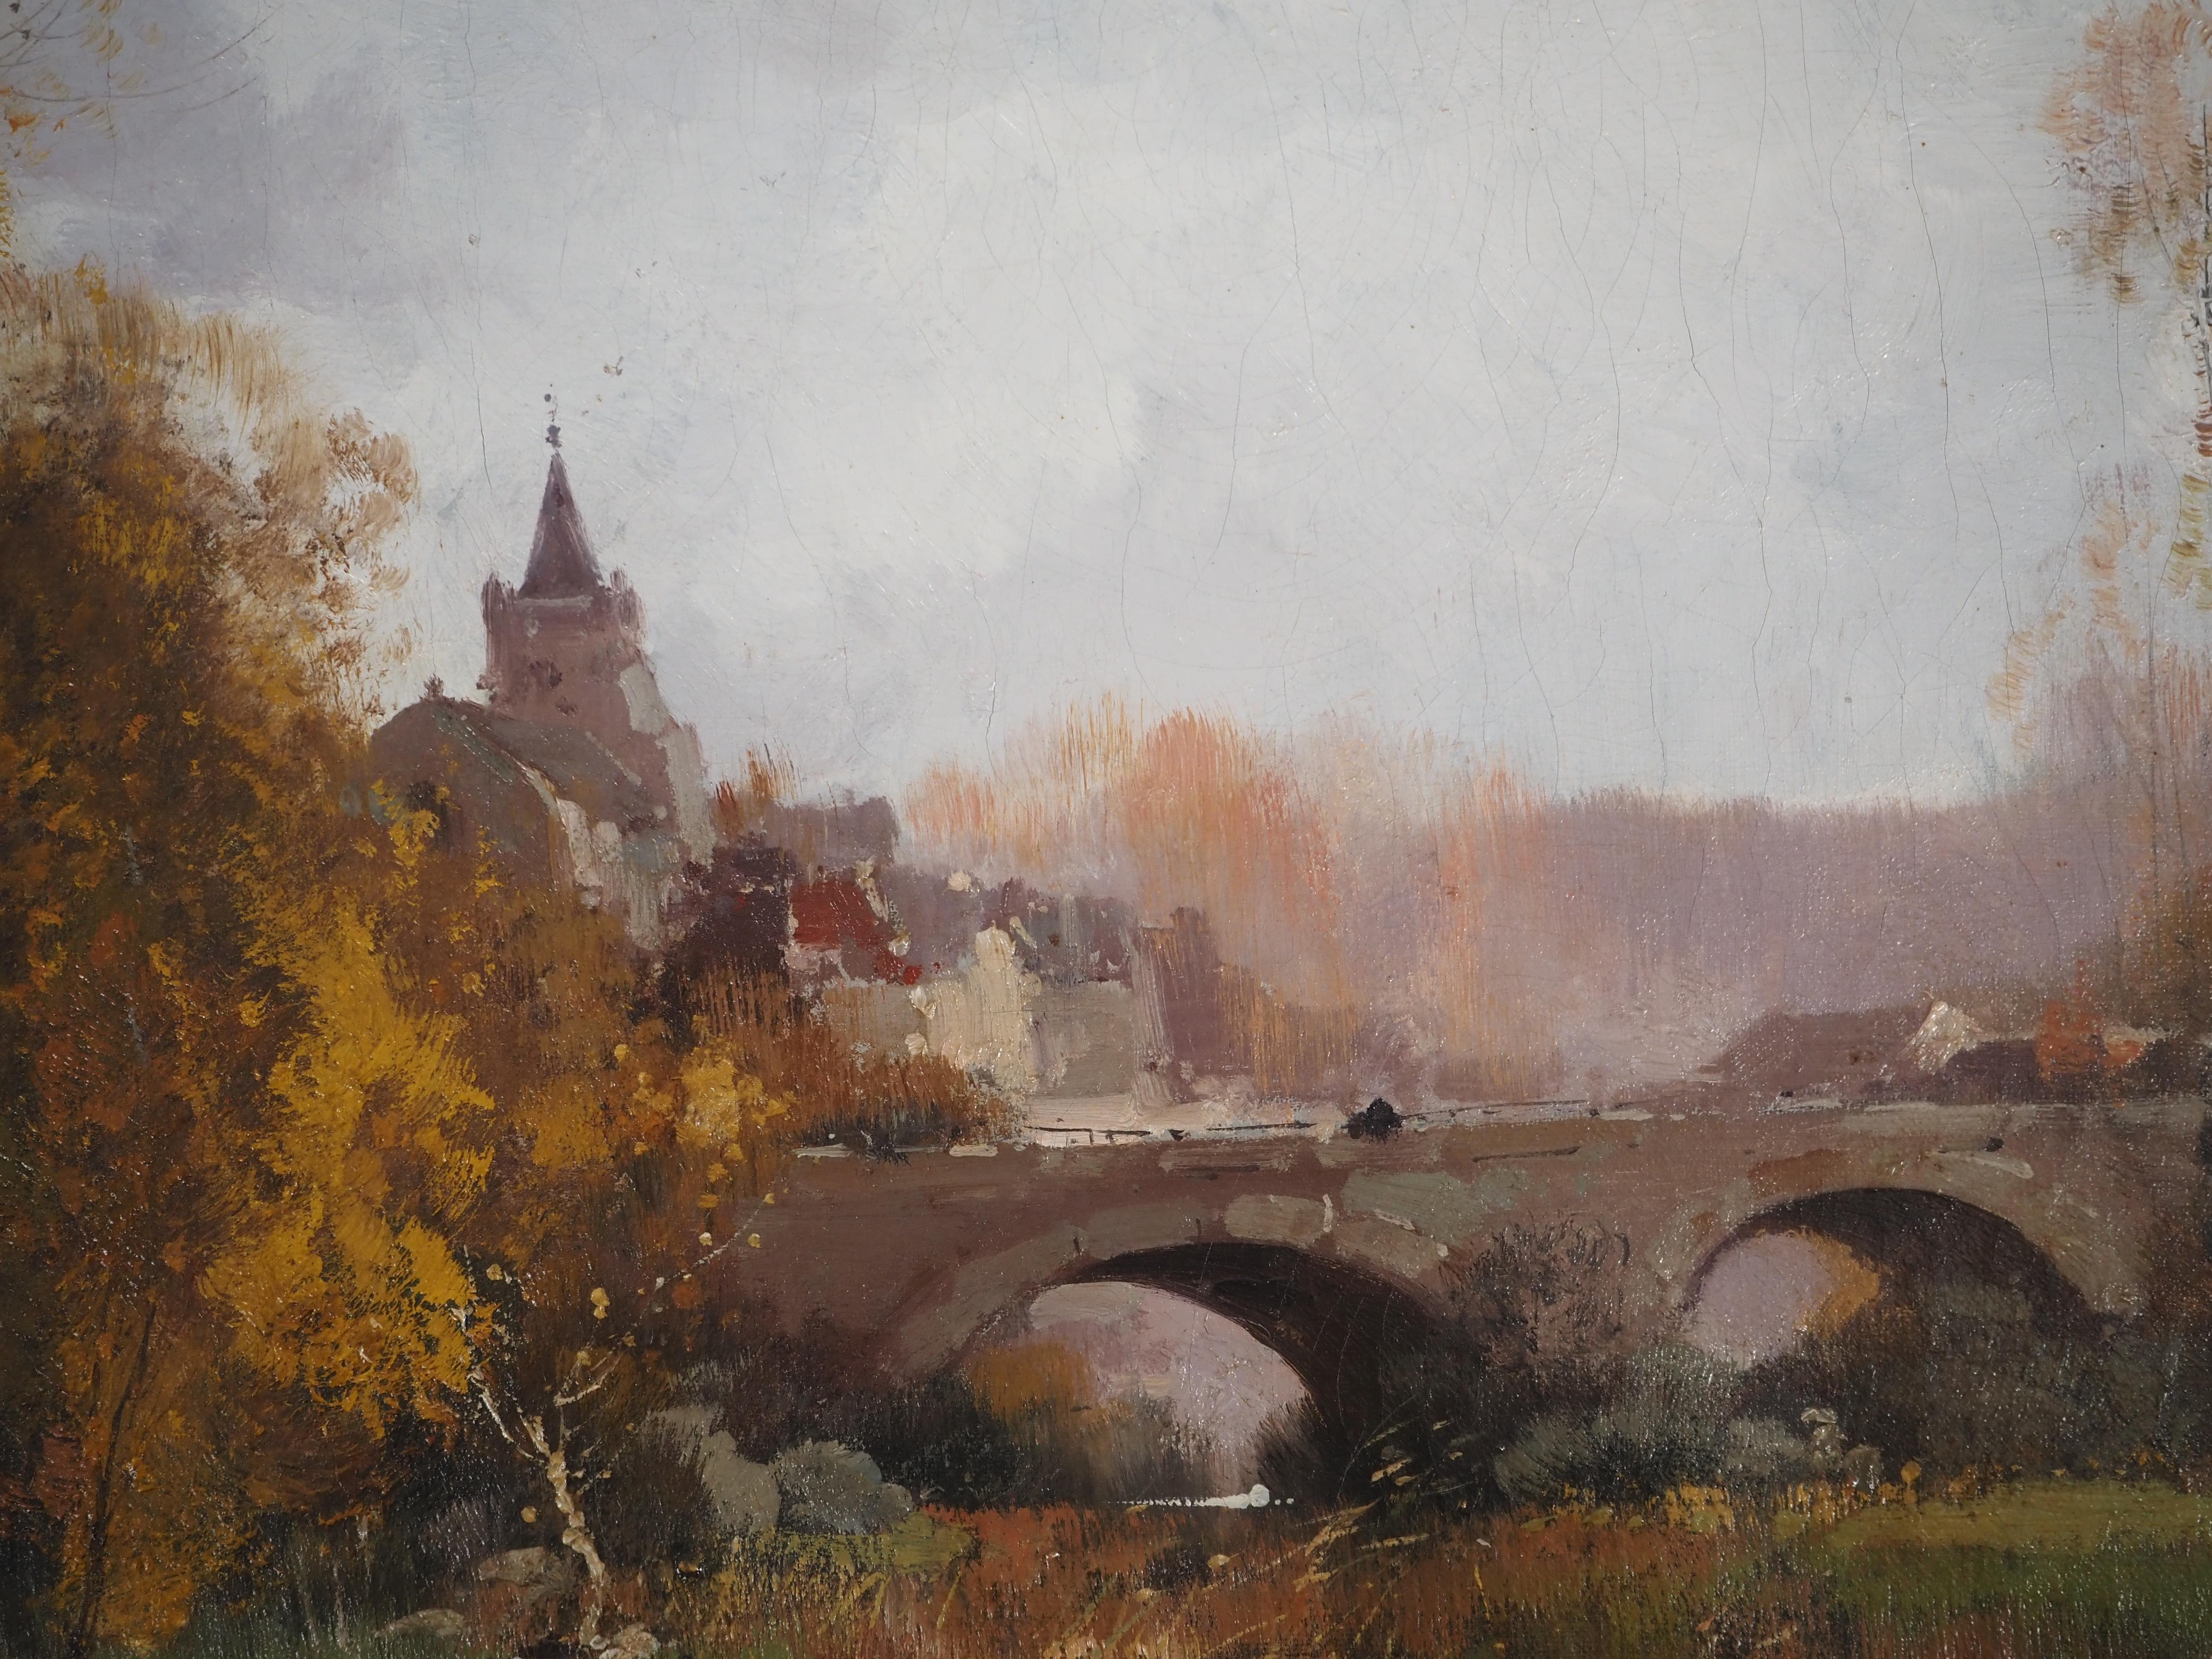 Normandy, Bridge Near a Village - Original painting on canvas - Signed - Gray Landscape Painting by Eugene Galien-Laloue